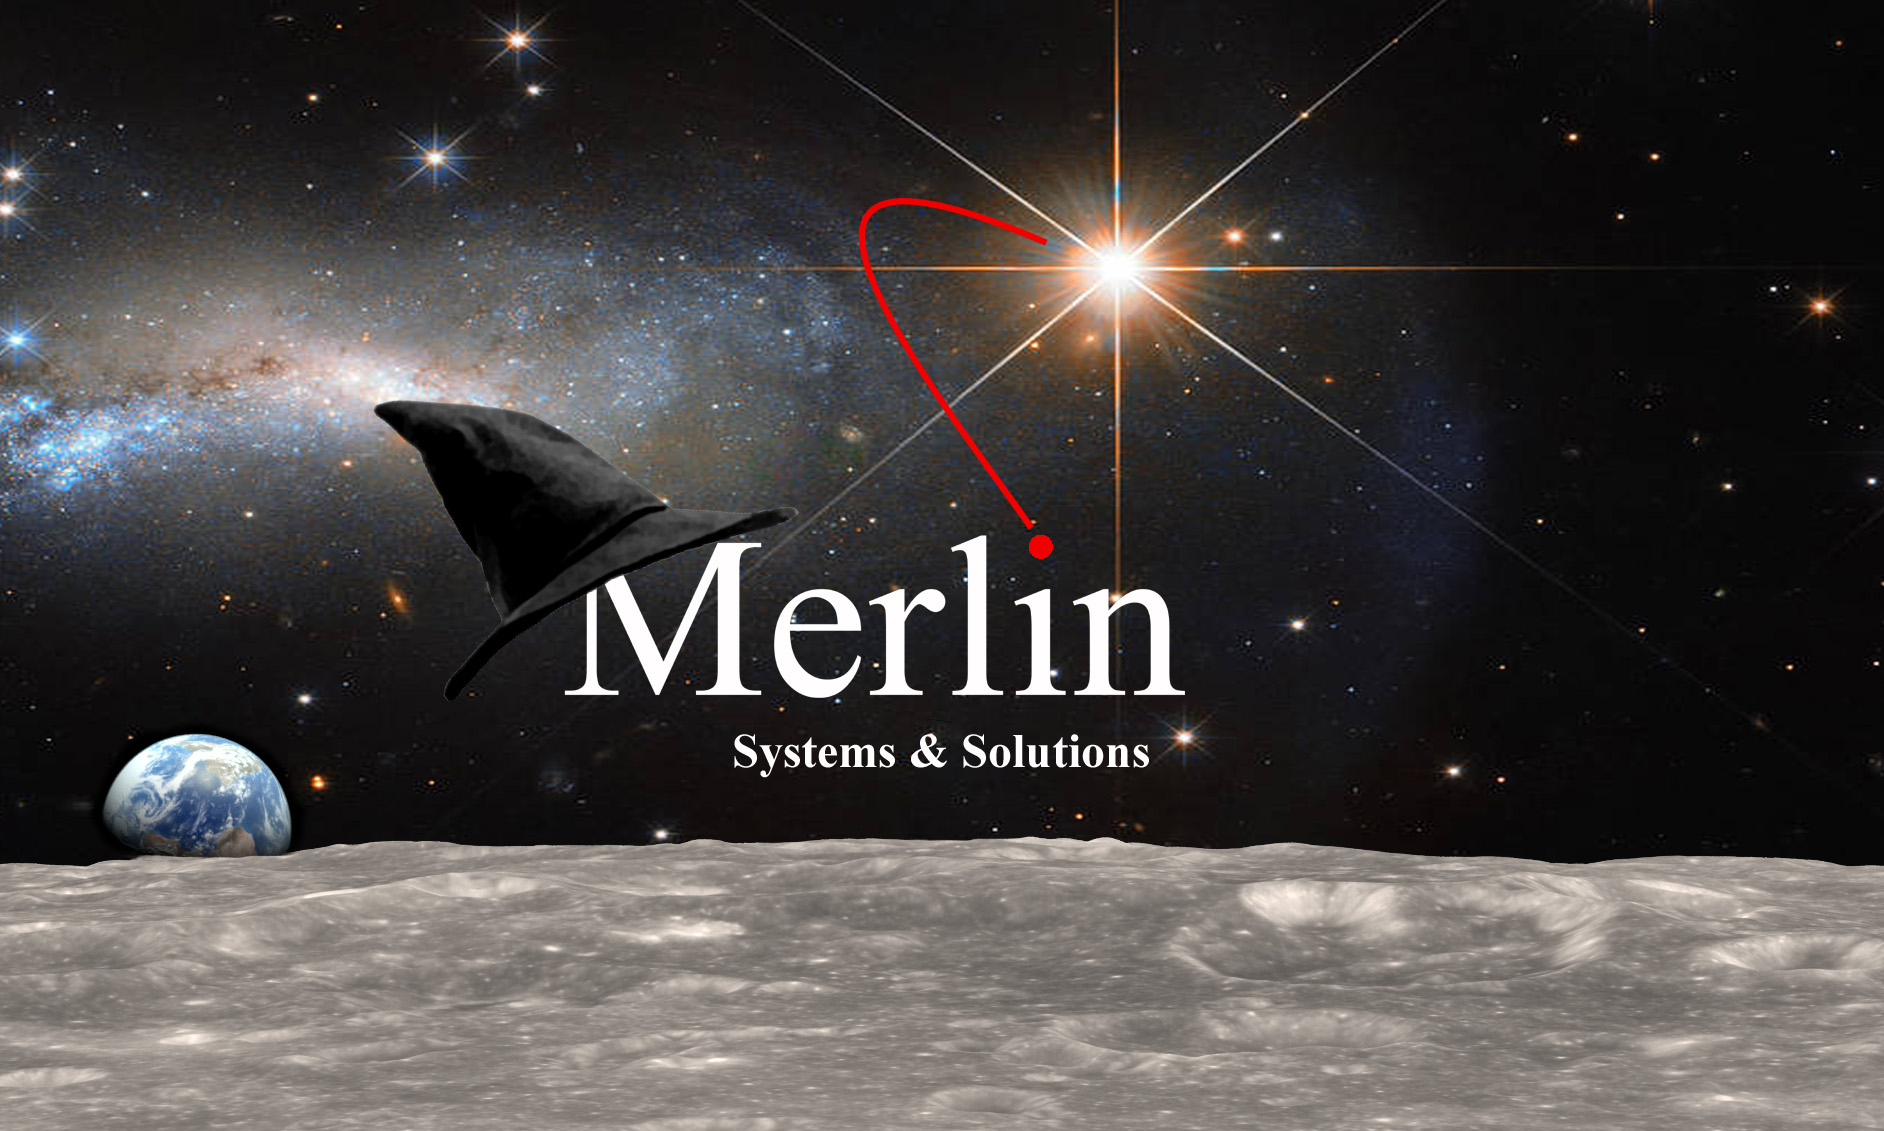 Merlin Systems